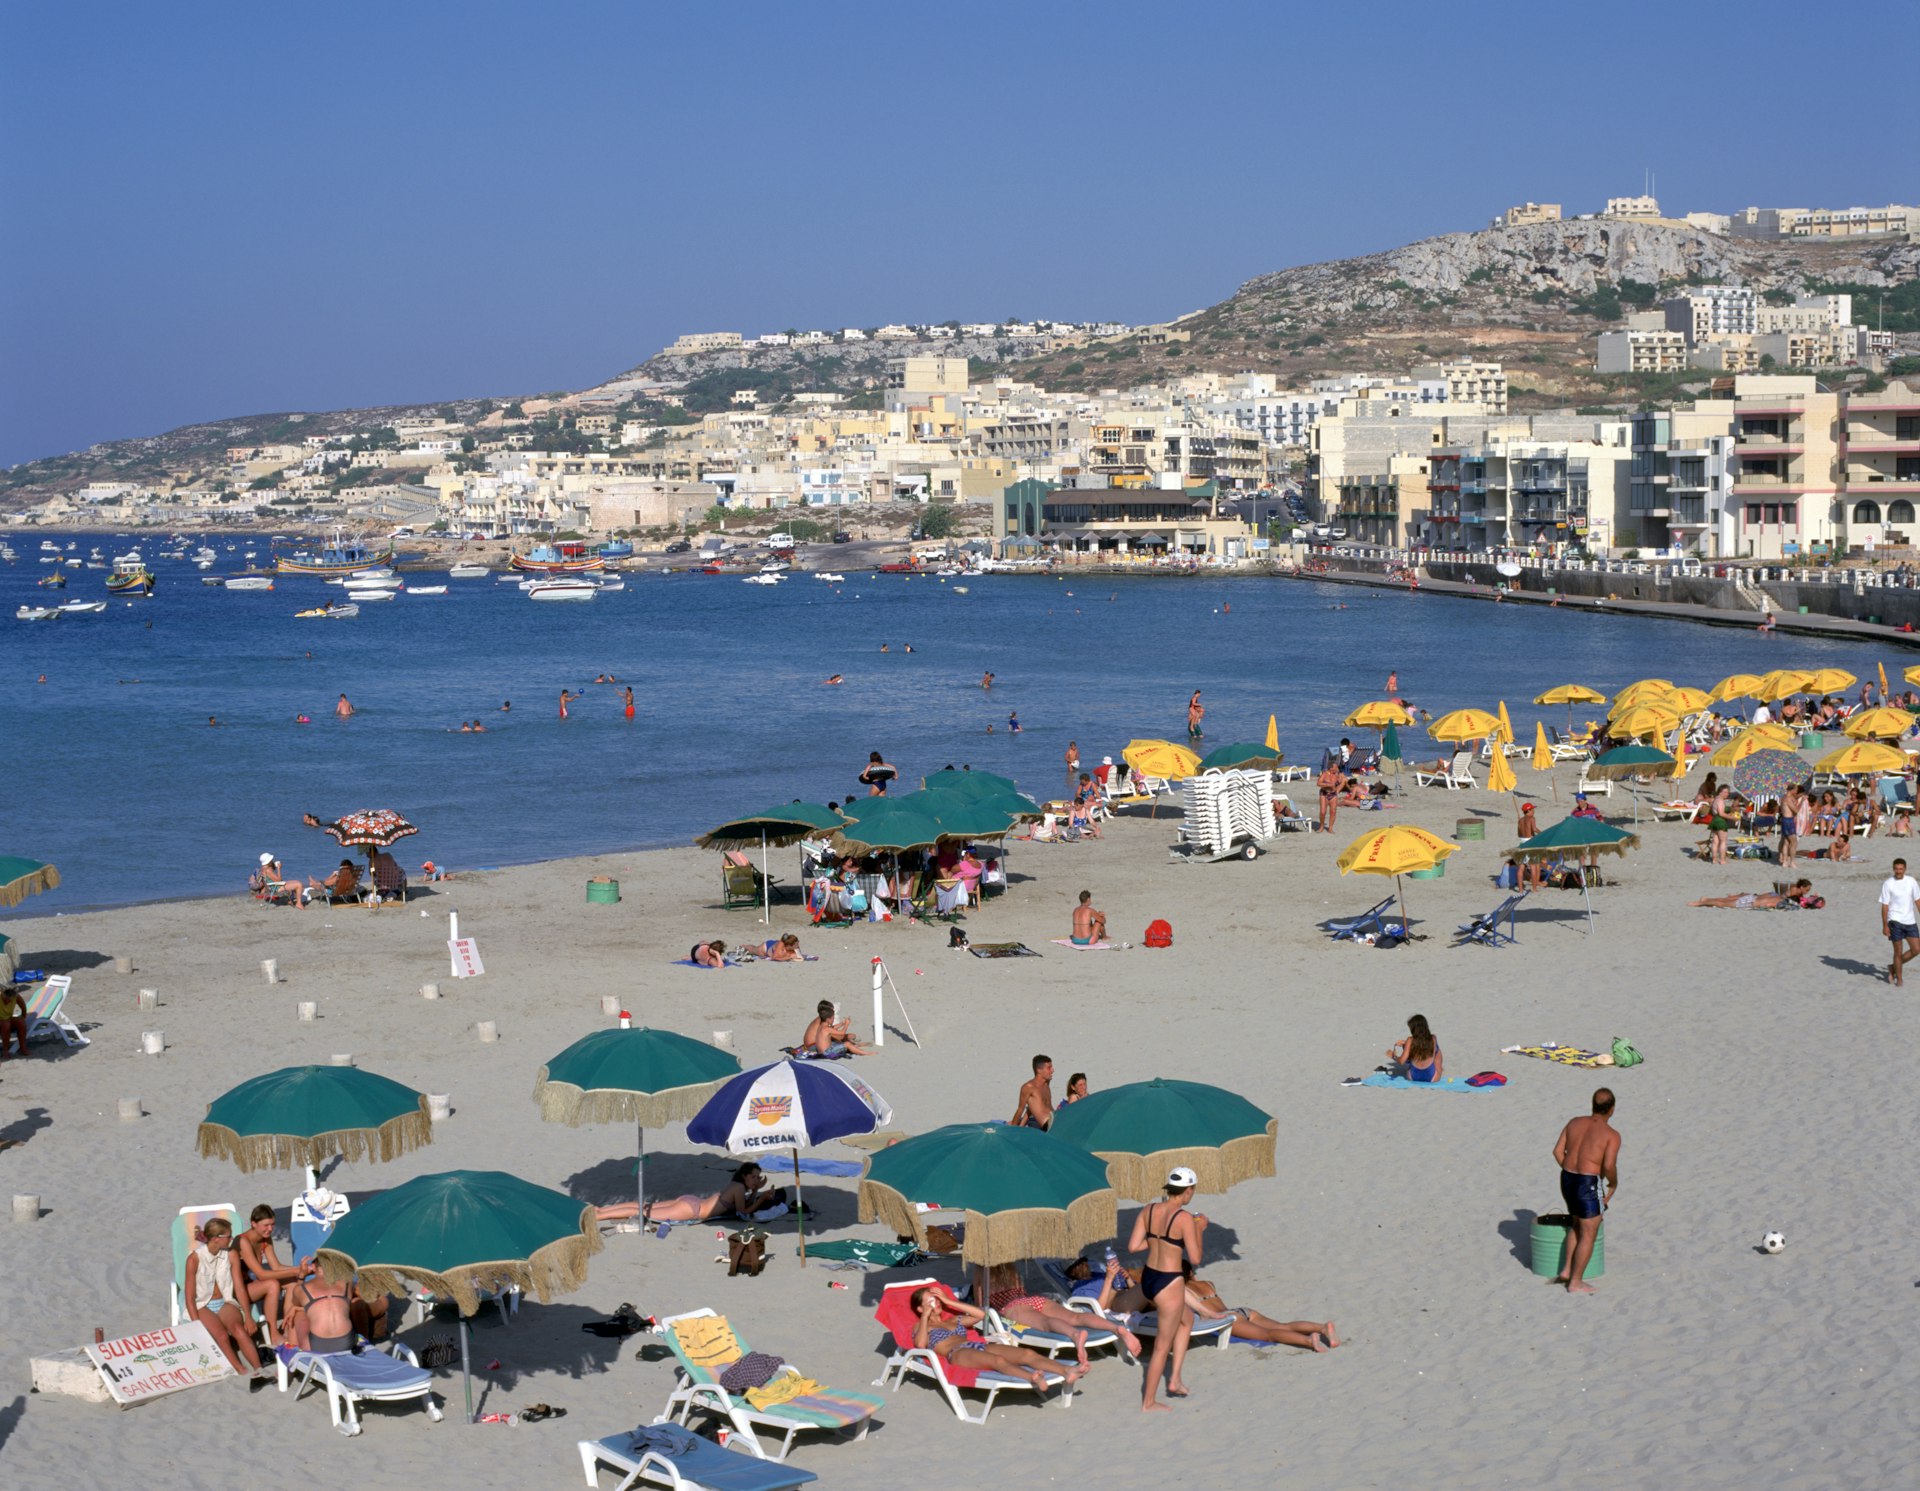 Tourists gather on the beach at Mellieha Bay, Malta